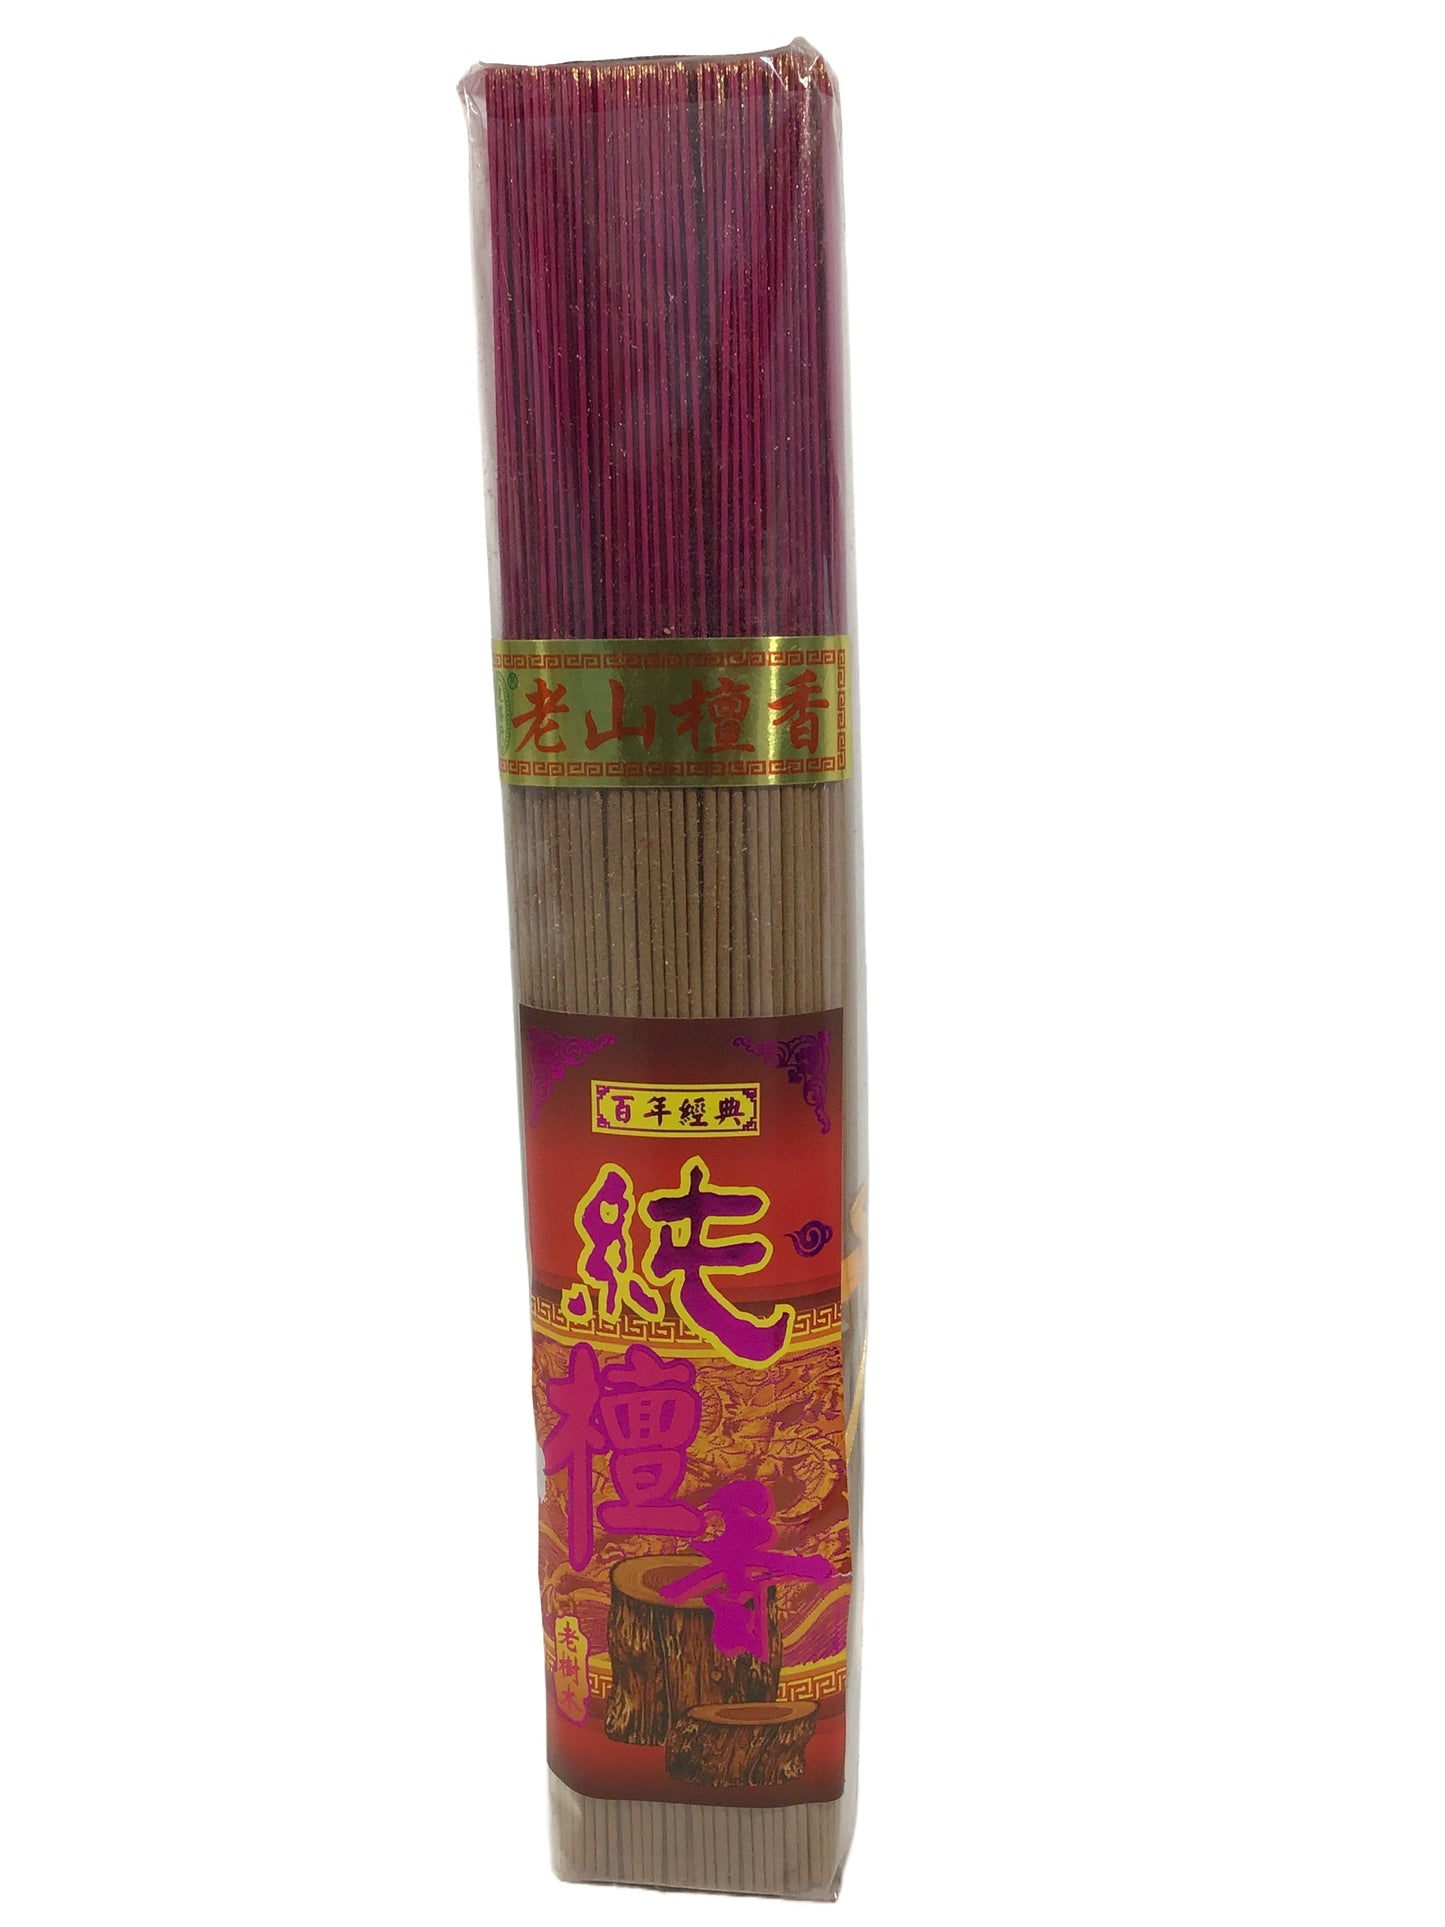 Premium Old Wood Sandalwood Joss Incense Sticks 32cm Long About 550 Sticks 老山檀香 百年经典 纯檀香